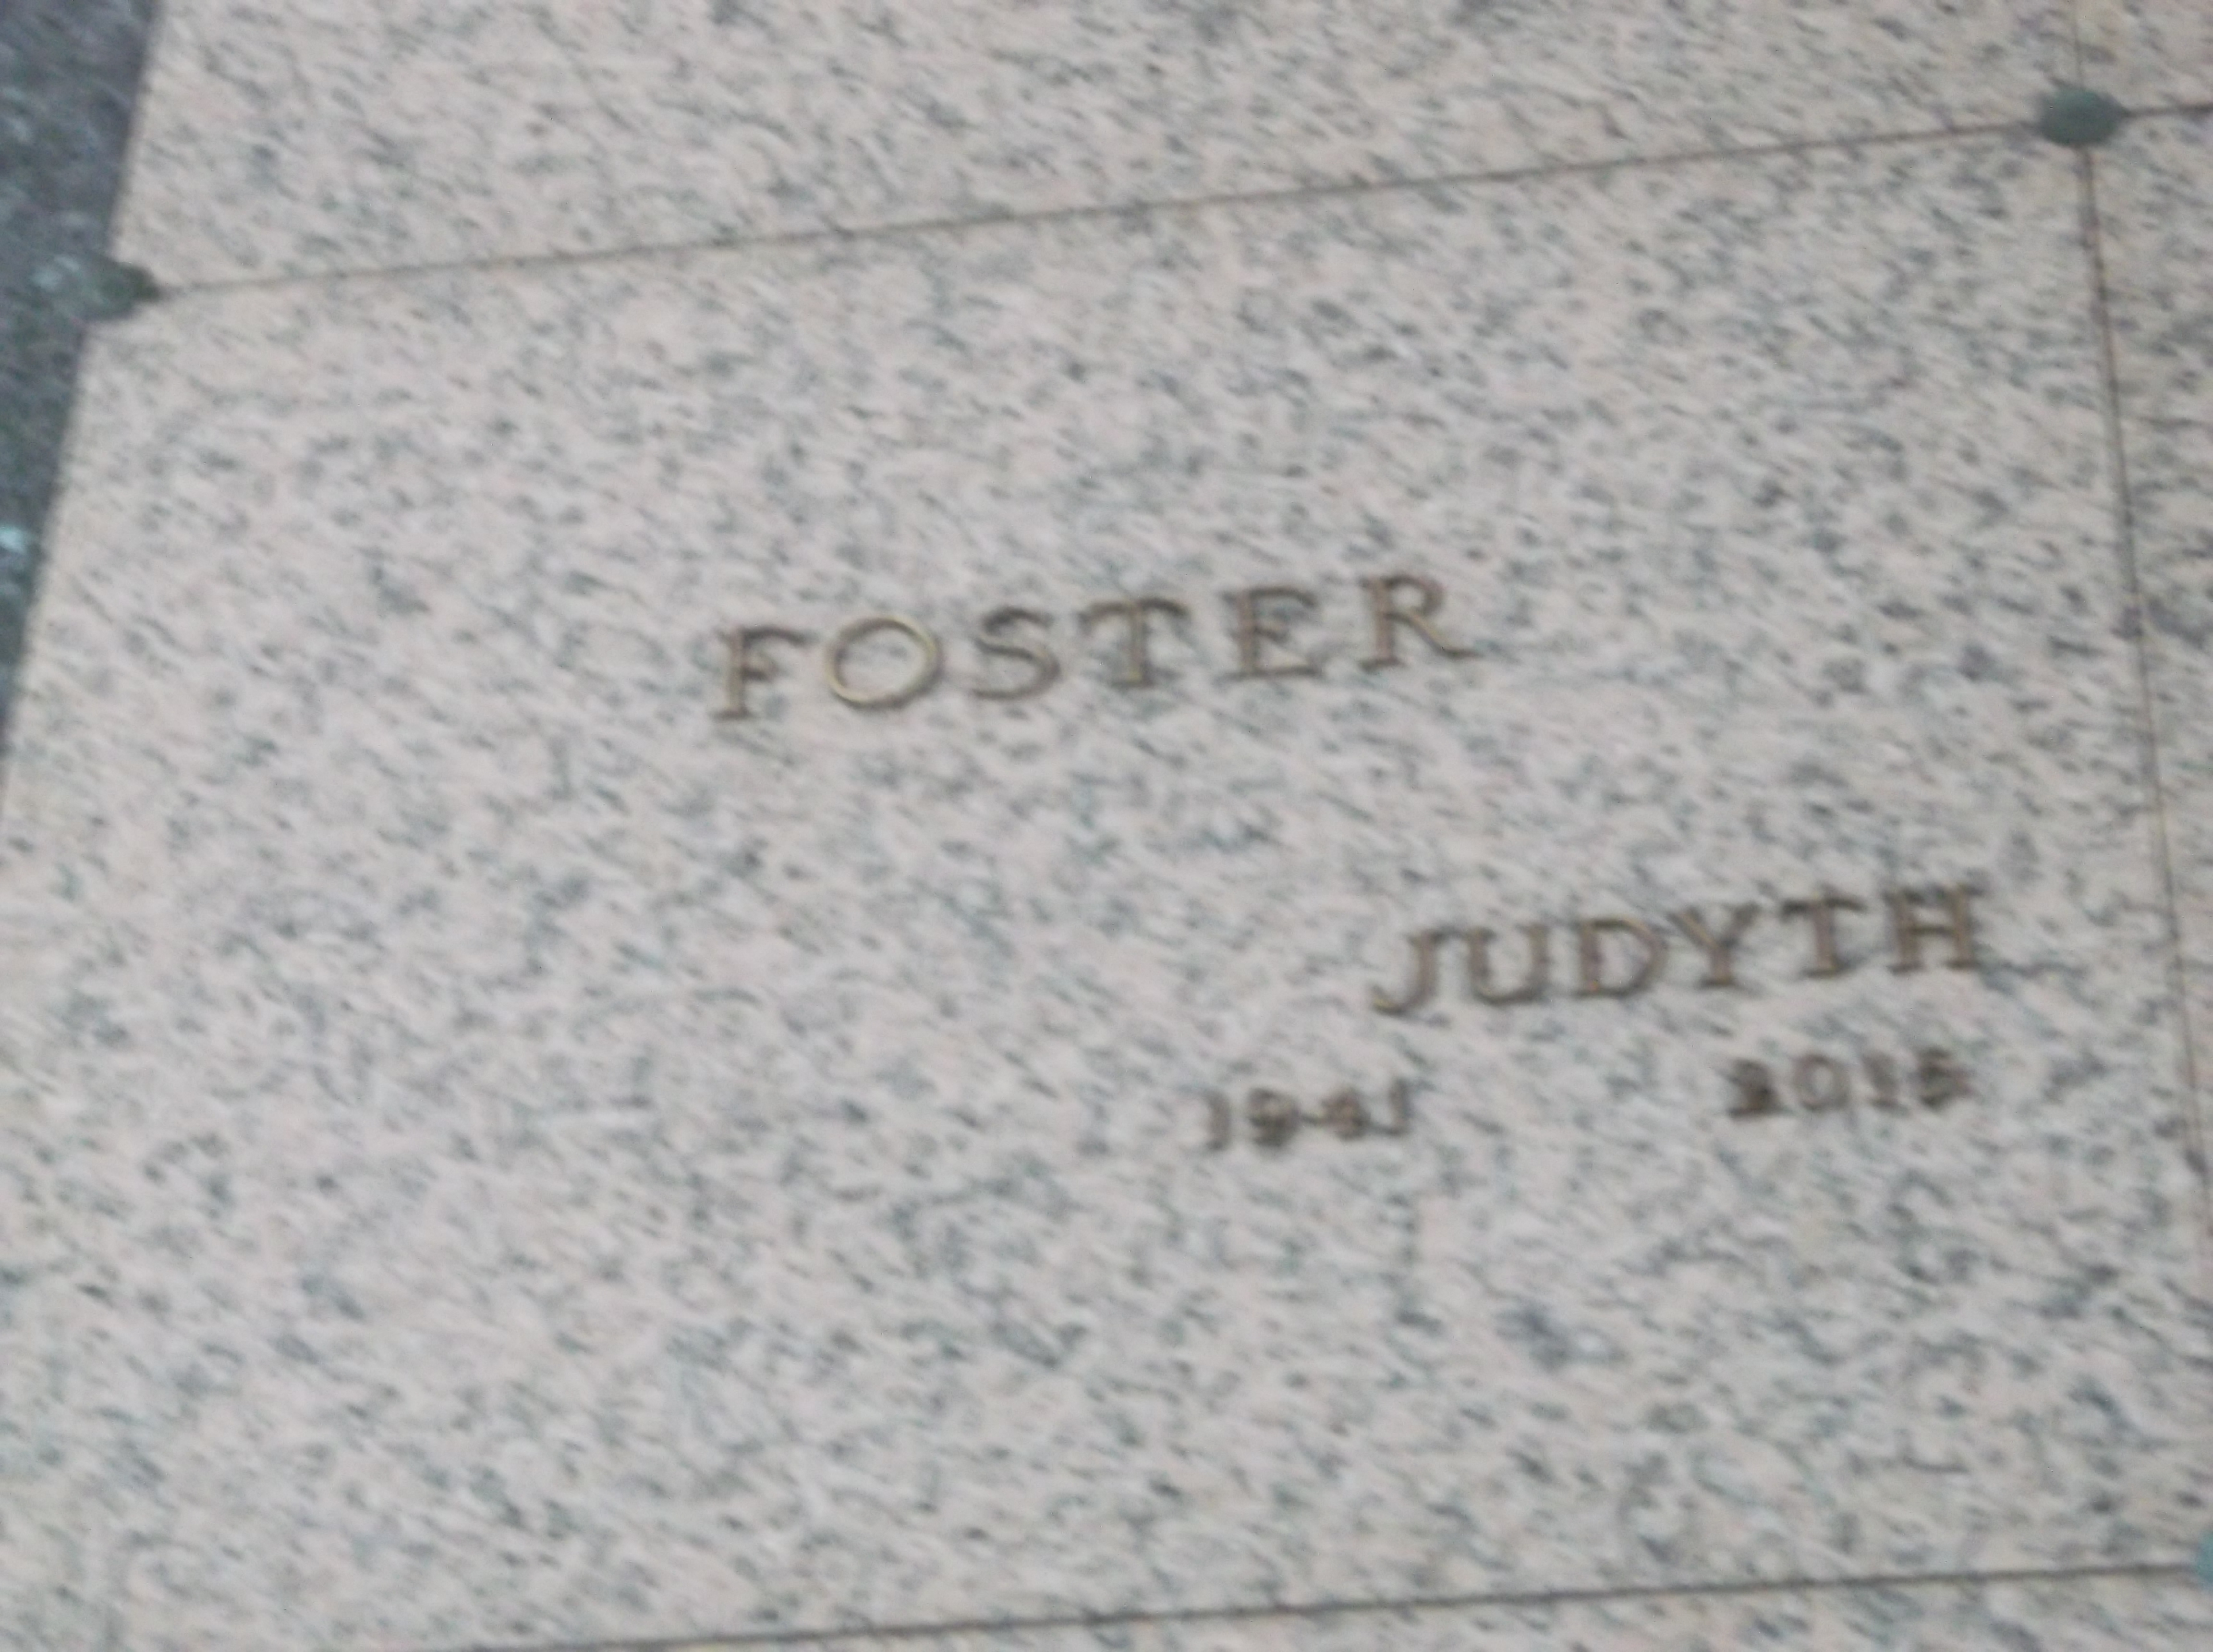 Judyth Foster